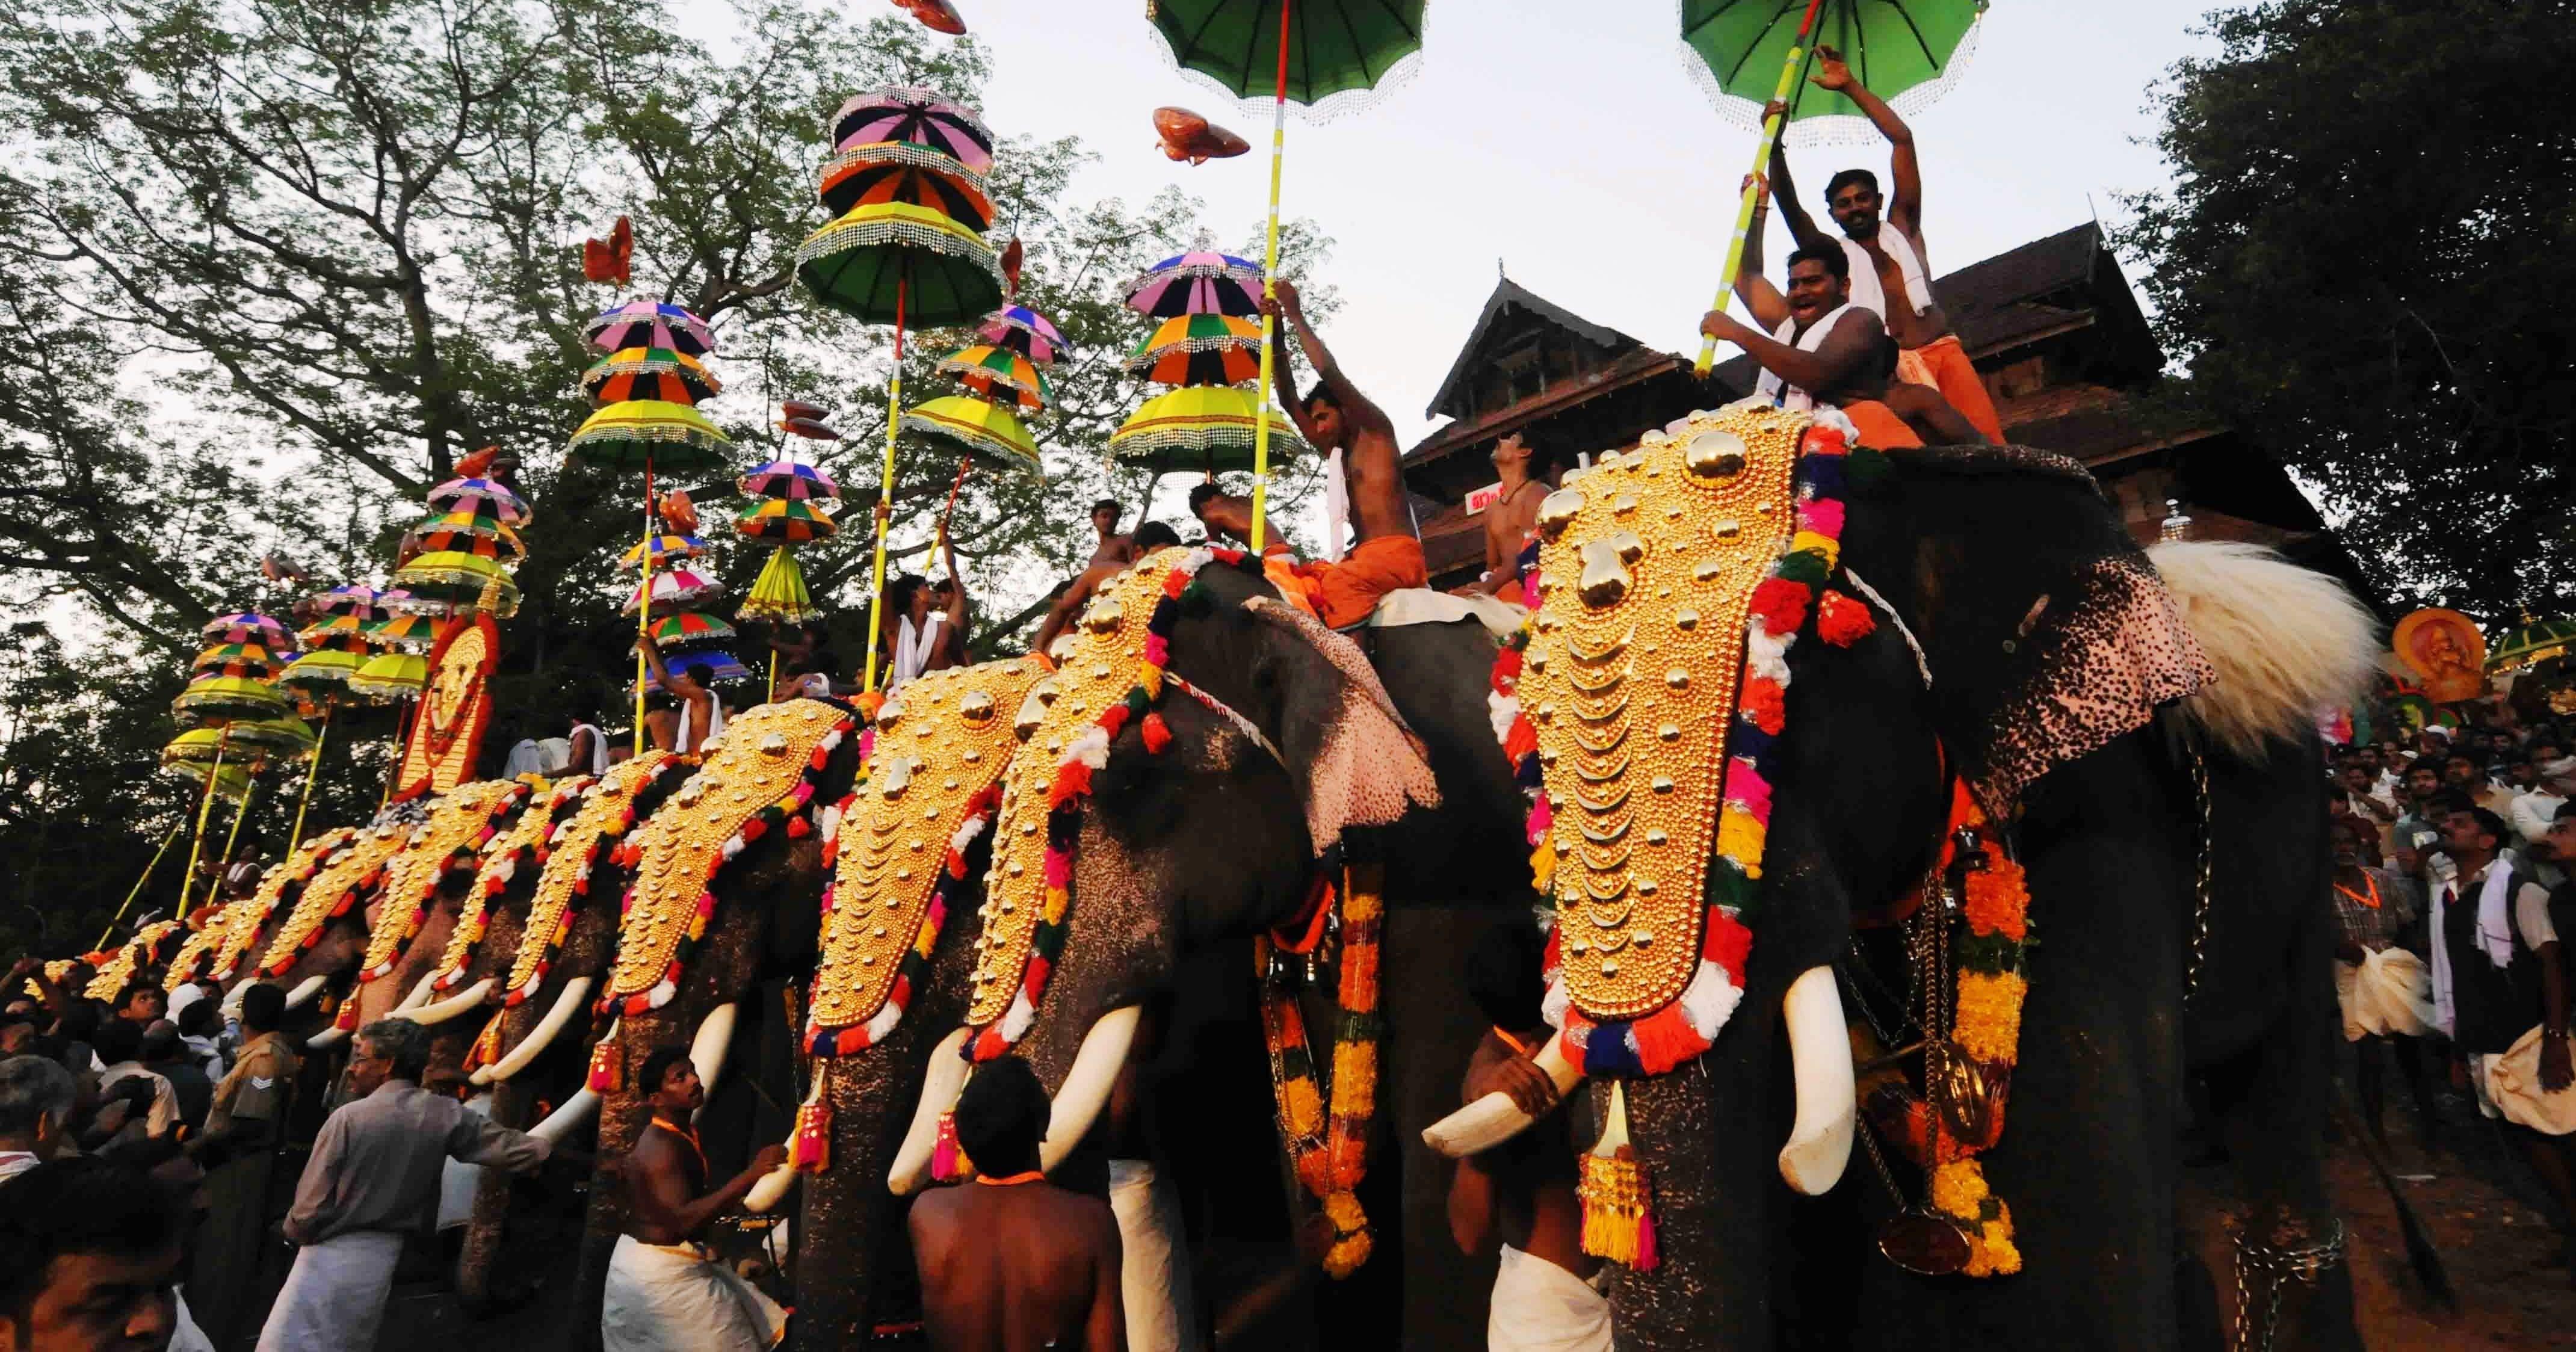 Festivals - Celebrate joyous moments and cultural traditions at vibrant festivals